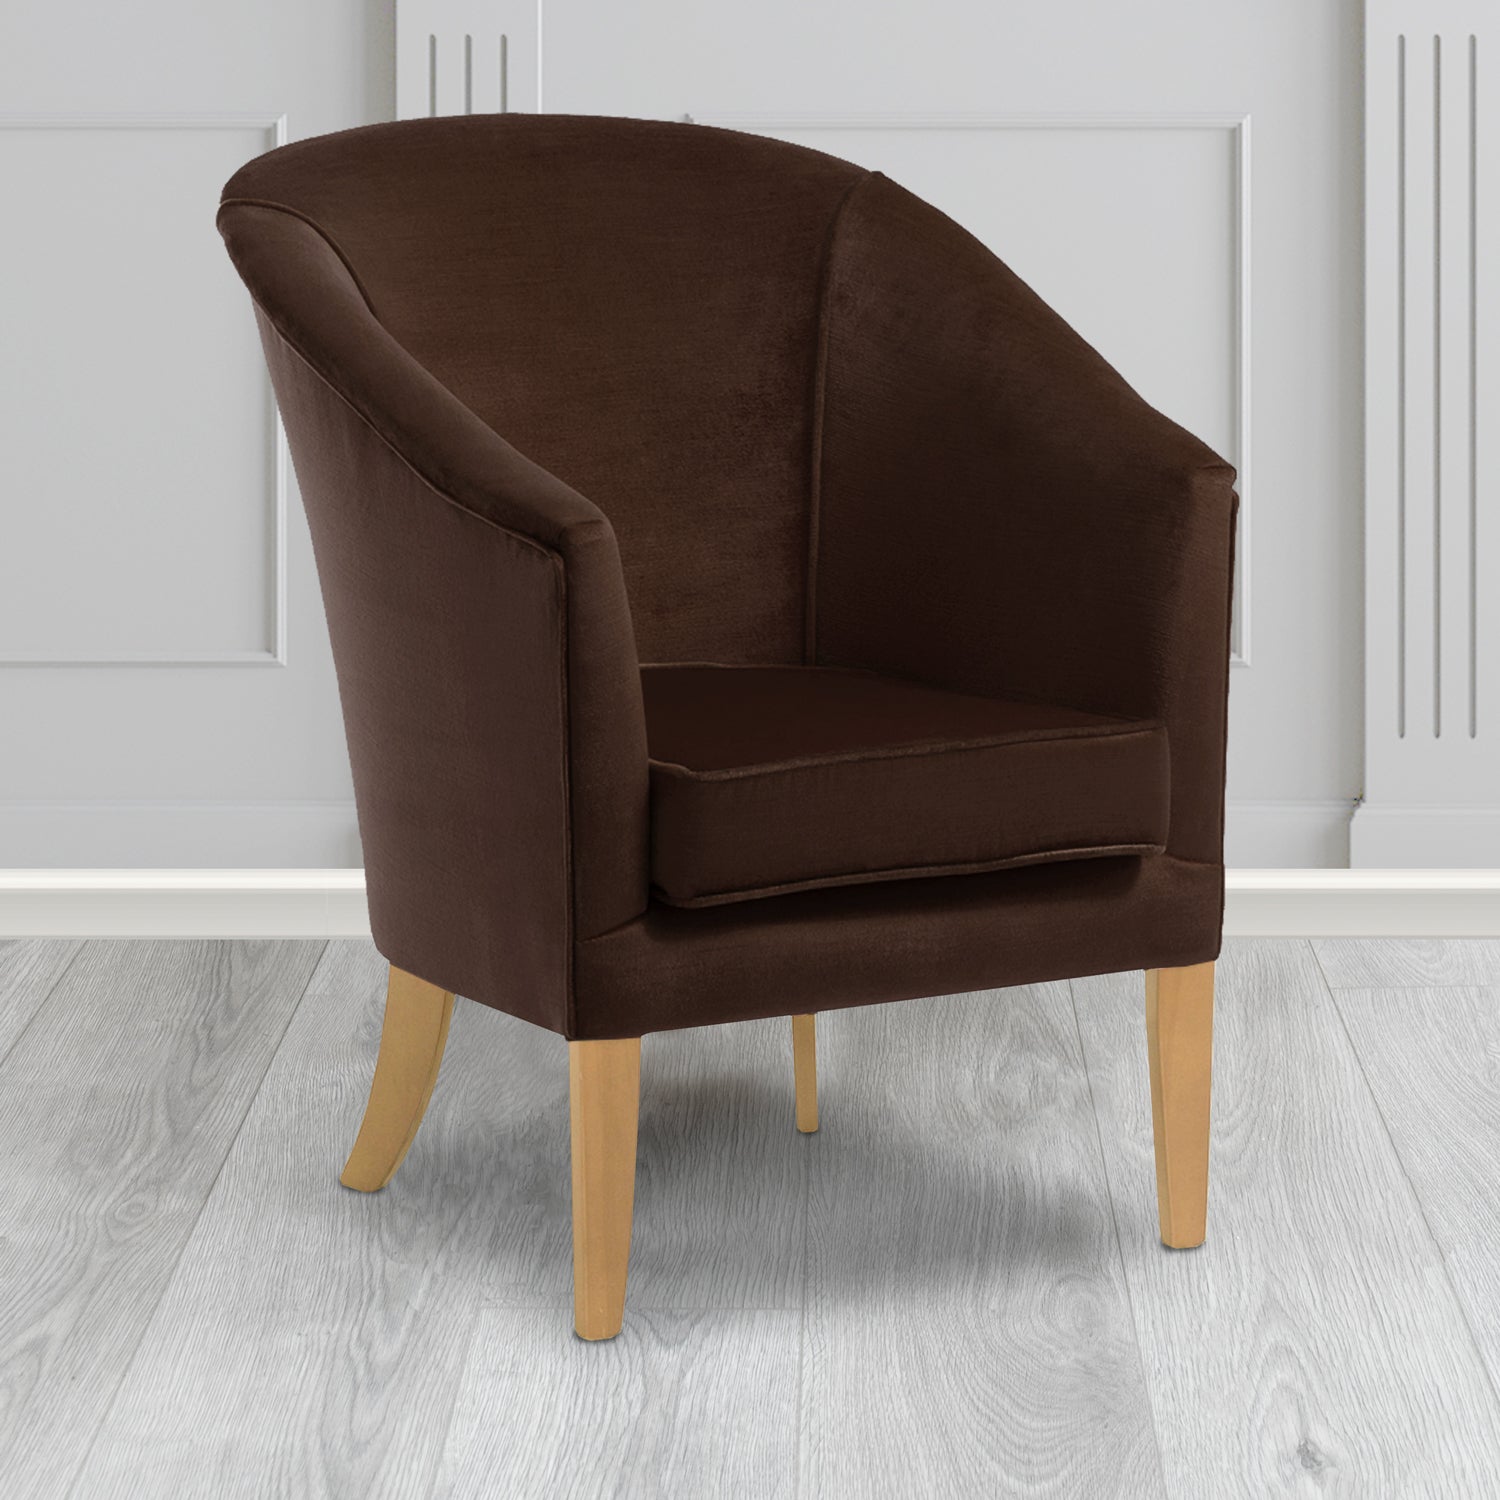 Burton Tub Chair in Noble 702 Chocolate Crib 5 Velvet Fabric - Water Resistant - The Tub Chair Shop